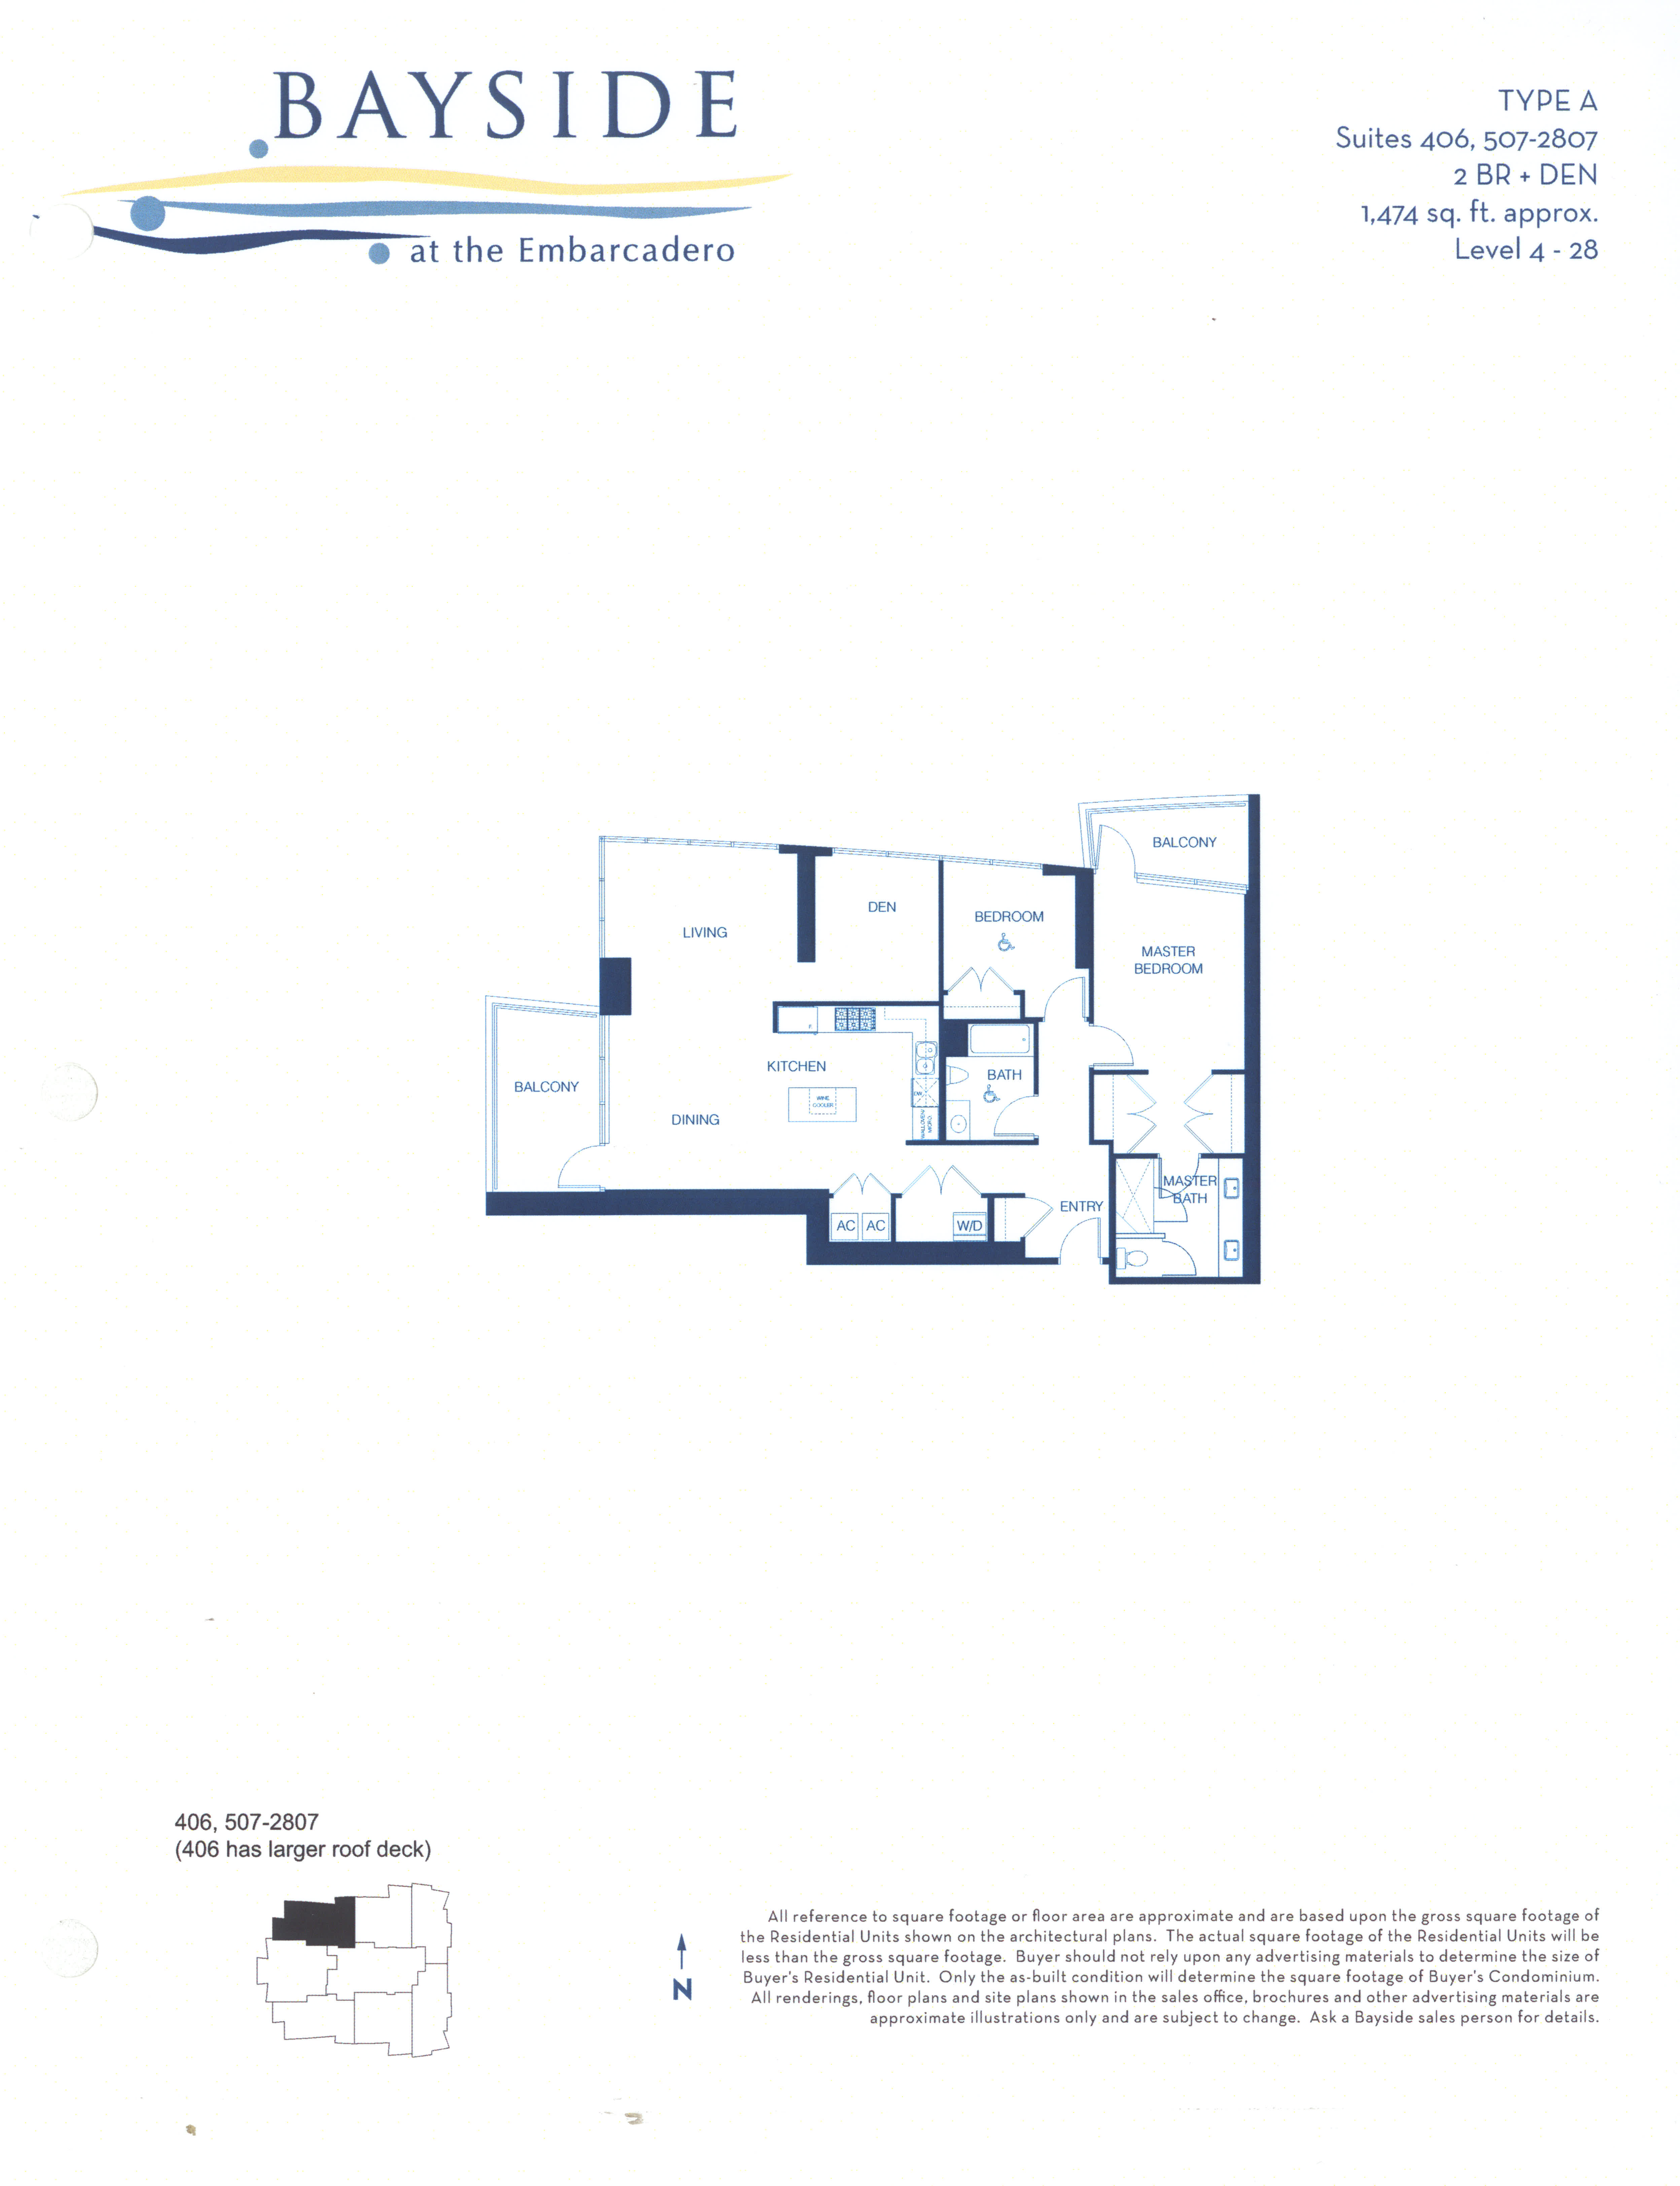 Bayside Floor Plan Level 4- 28 Type A